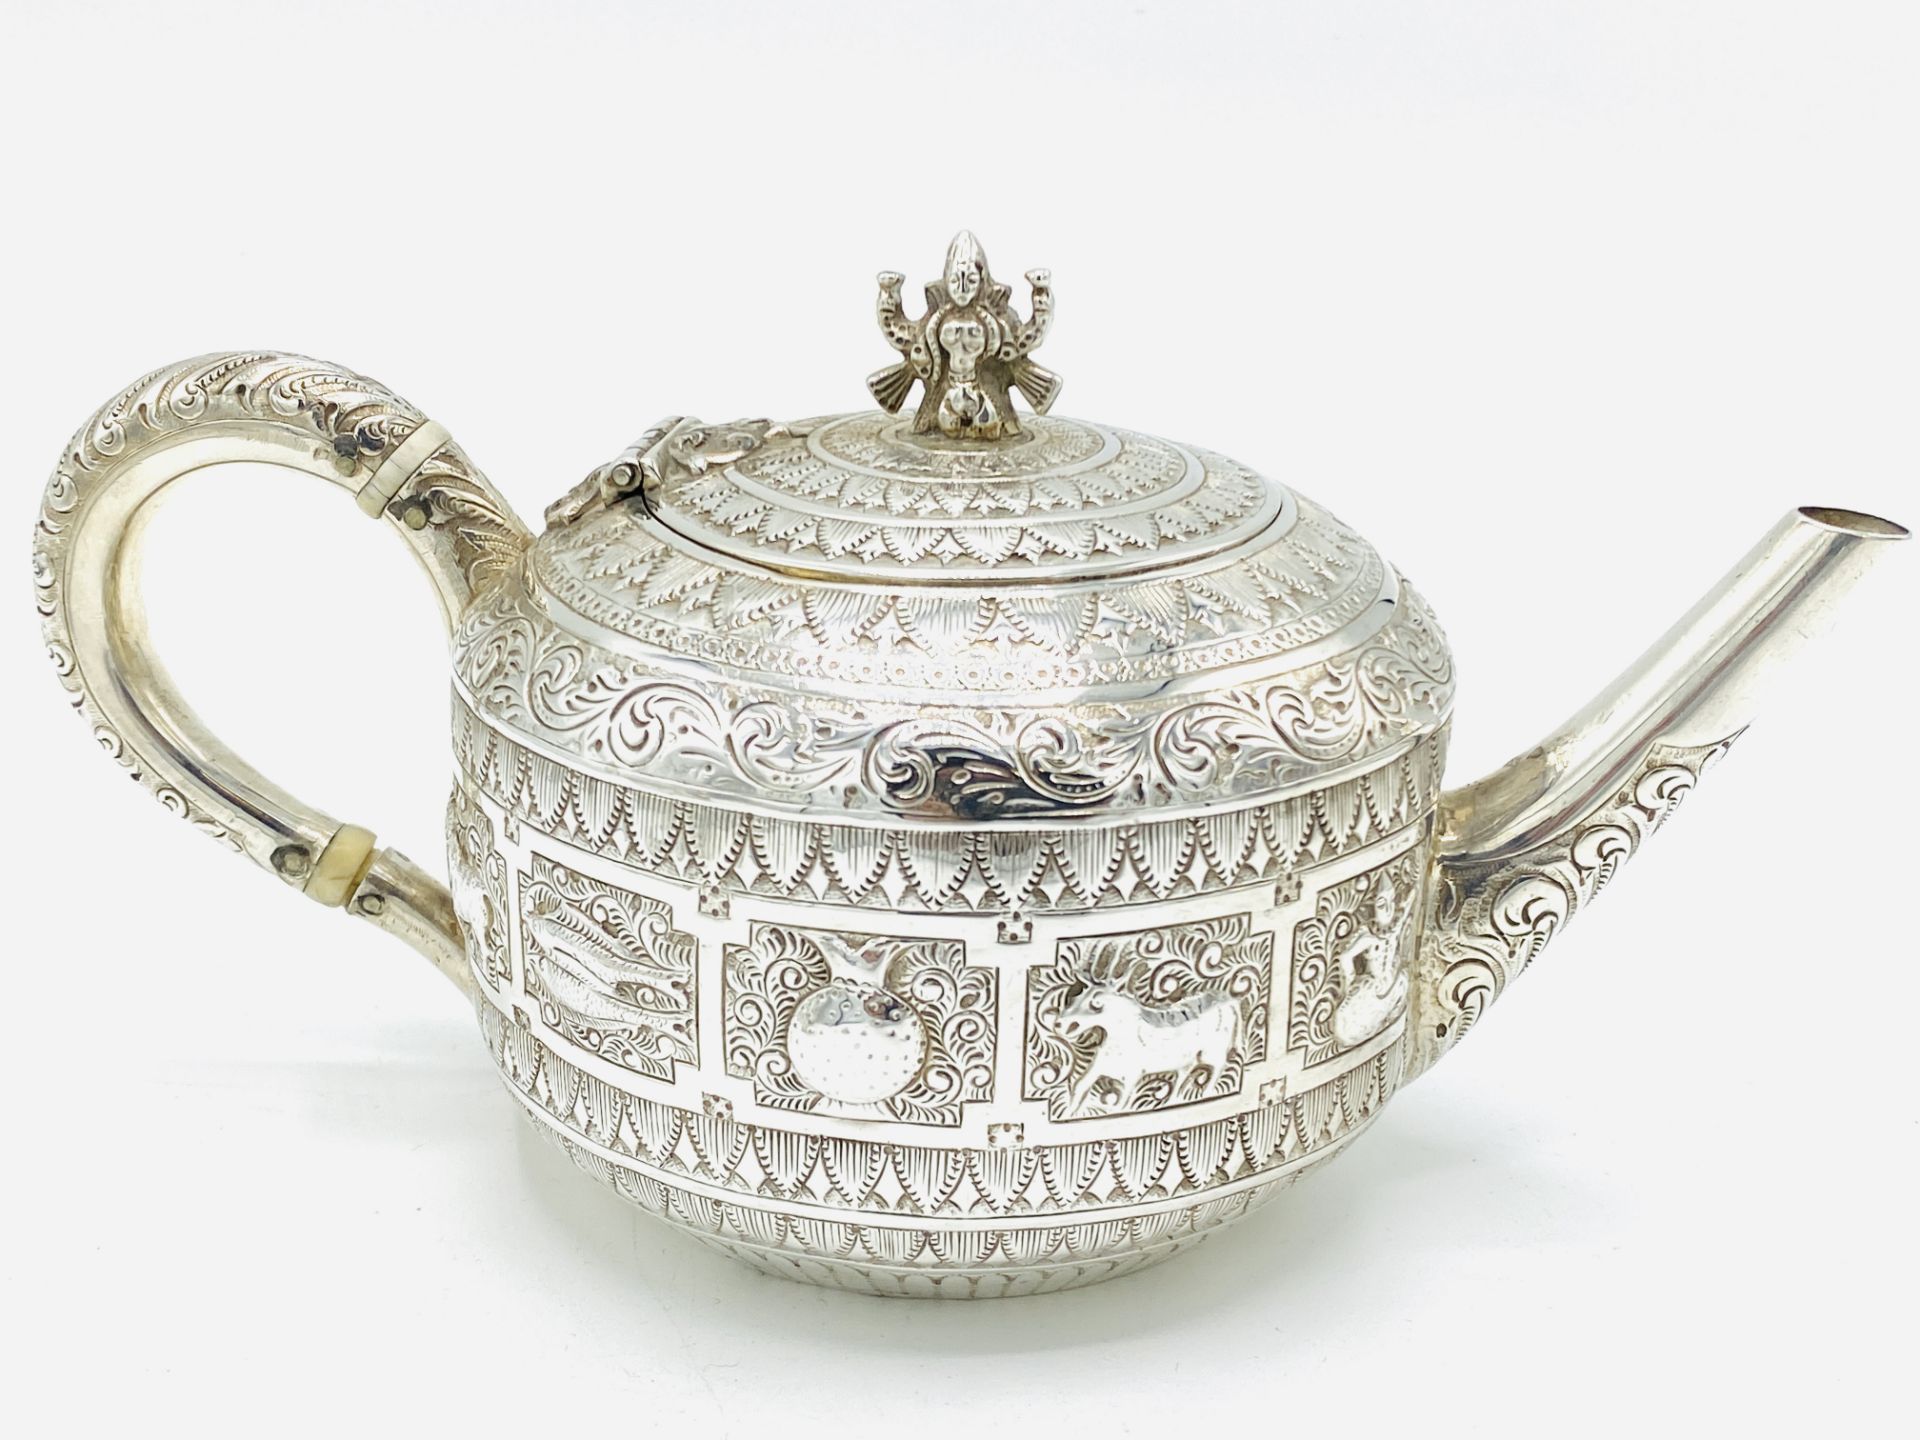 Scottish silver tea service by Hamilton & Inches, hallmarked Edinburgh 1877 - Image 2 of 7